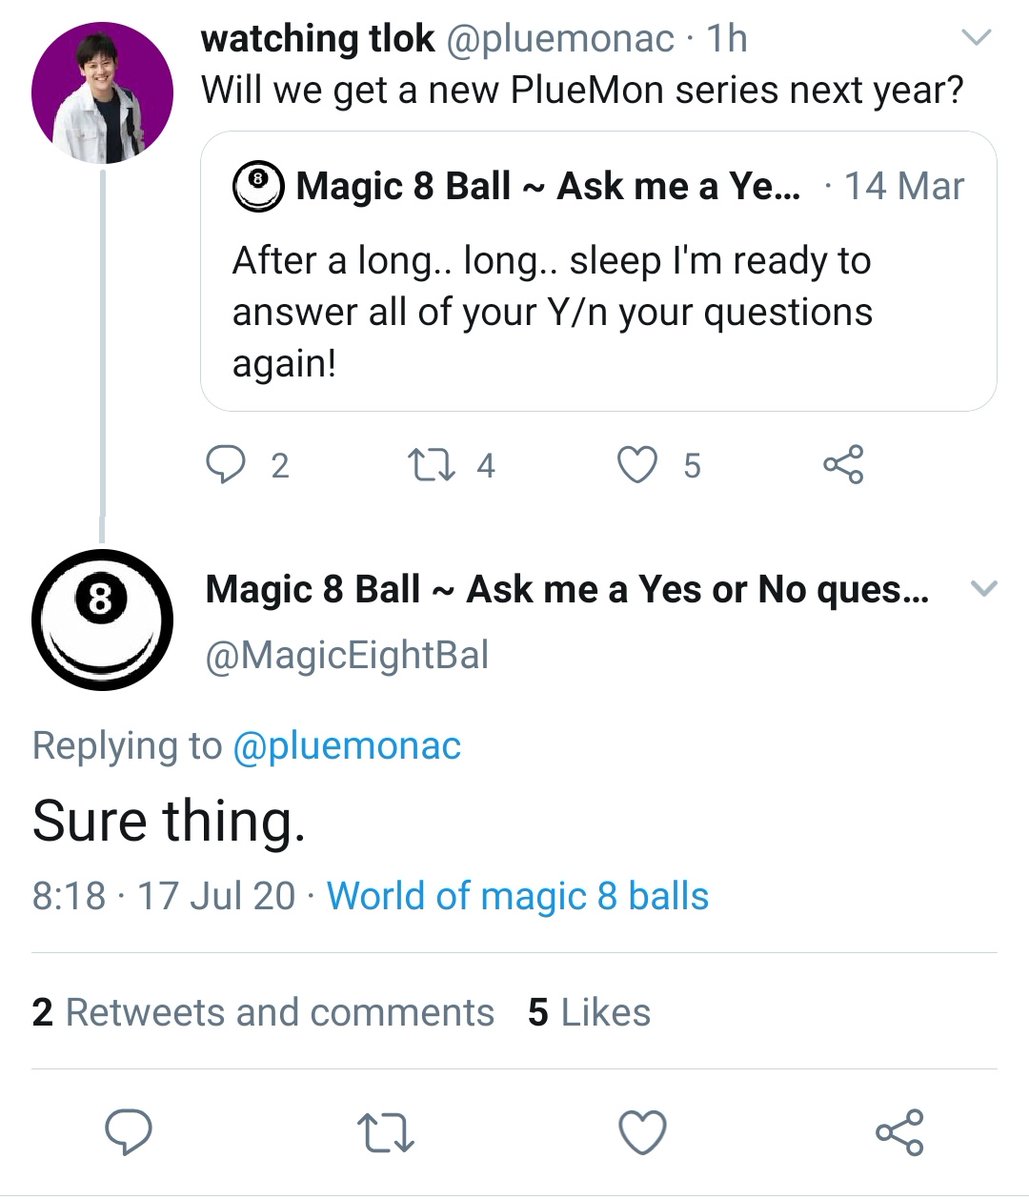 The magic 8 ball says, “Sure thing.”